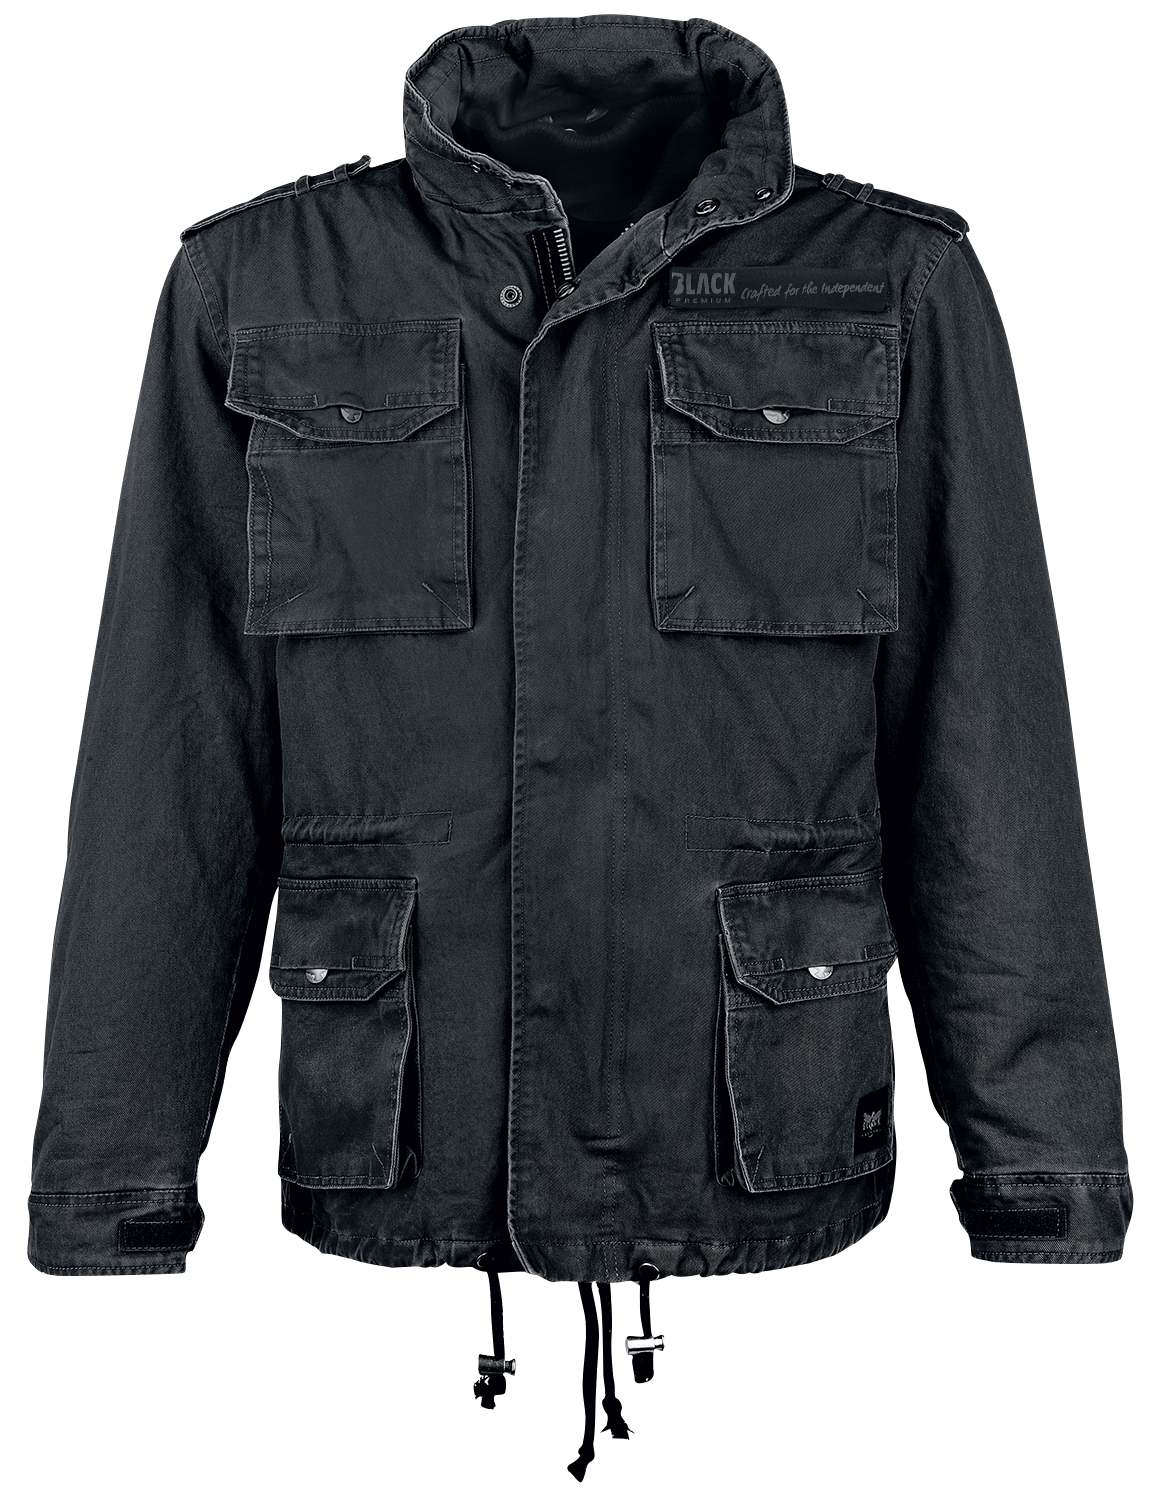 Black Premium by EMP - Army Field Jacket - Winterjacke - schwarz - EMP Exklusiv!